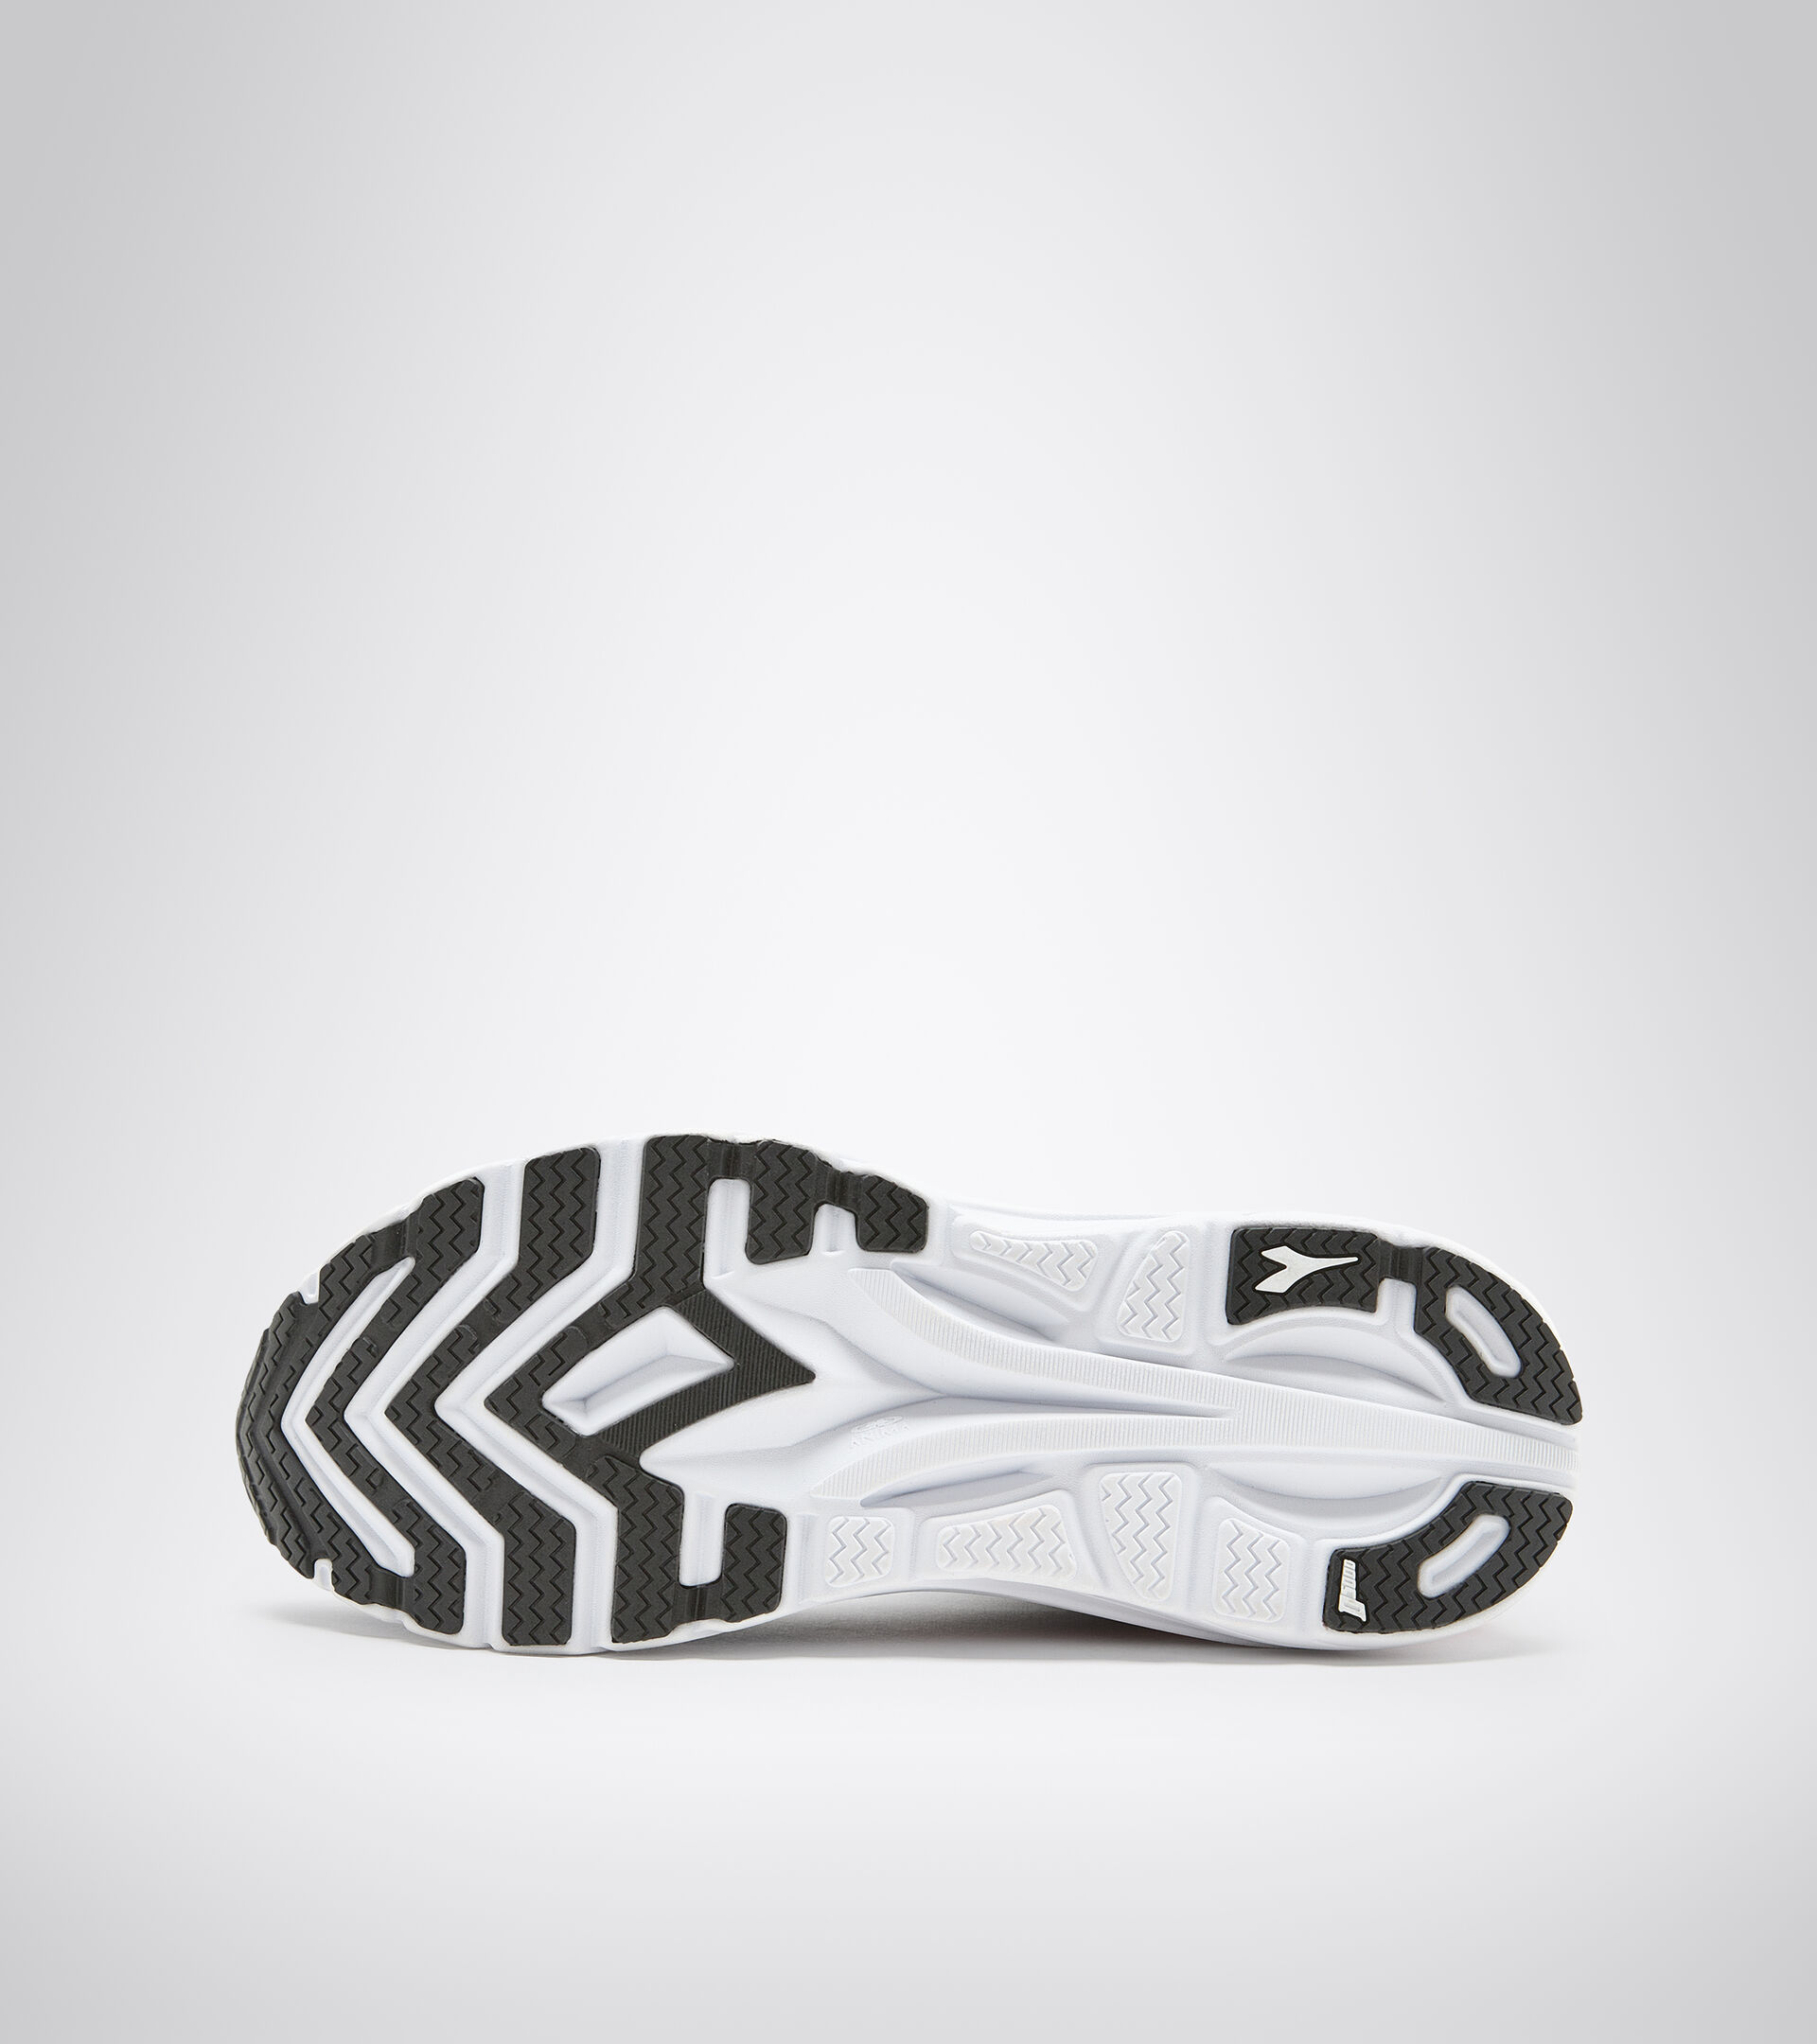 Made in Italy - Running shoes - Men’s EQUIPE ATOMO STEEL GRAY/WHITE - Diadora